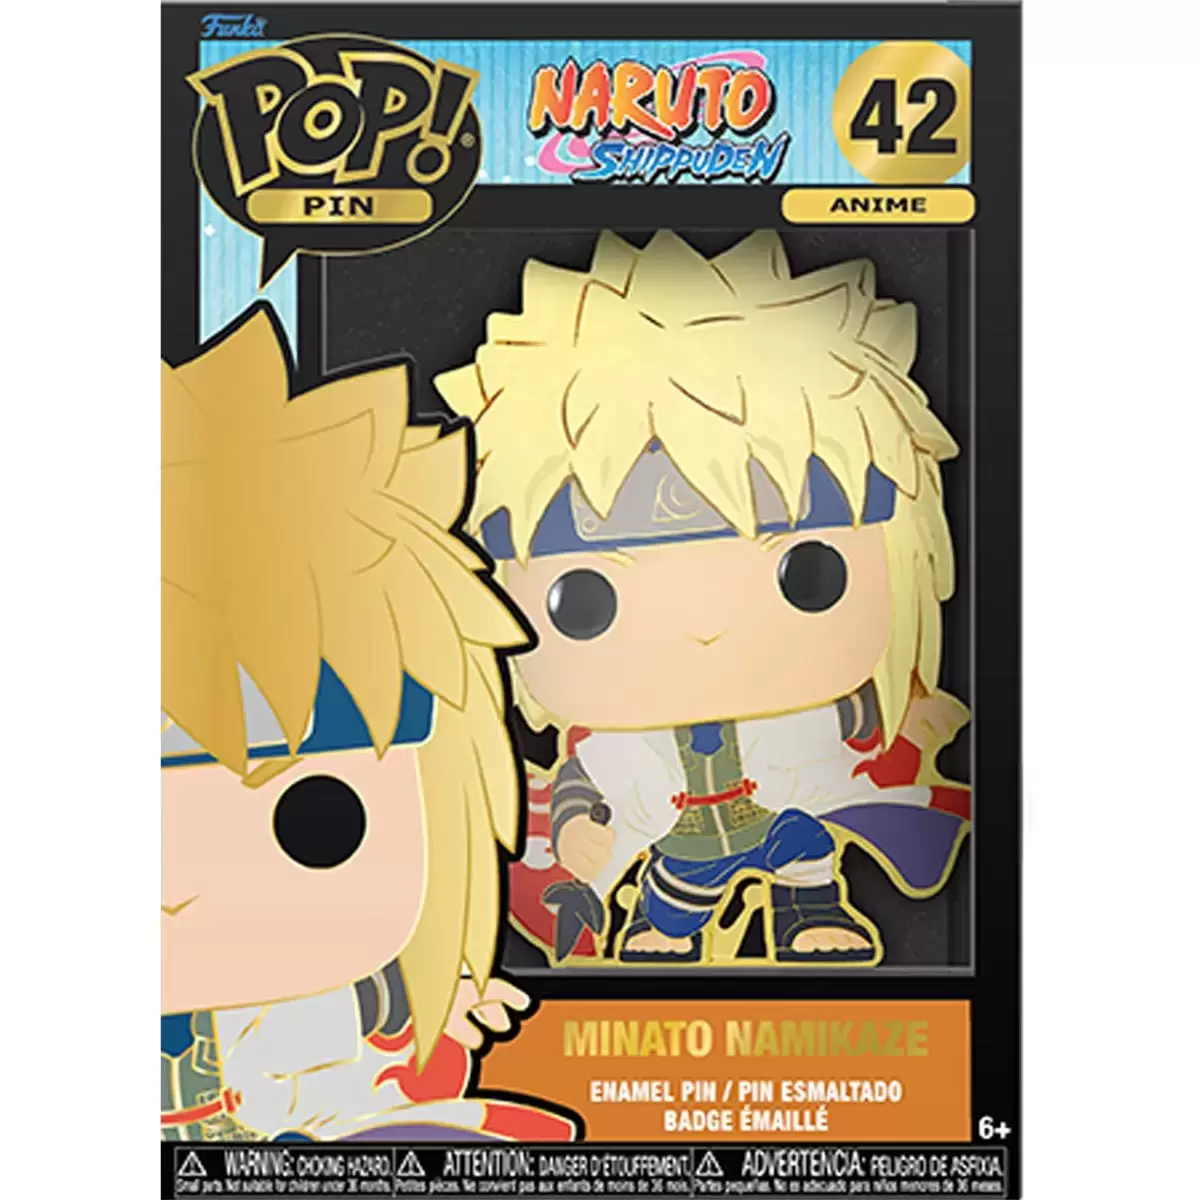 POP! Pin Anime - Naruto Shippuden - Minato Namikaze